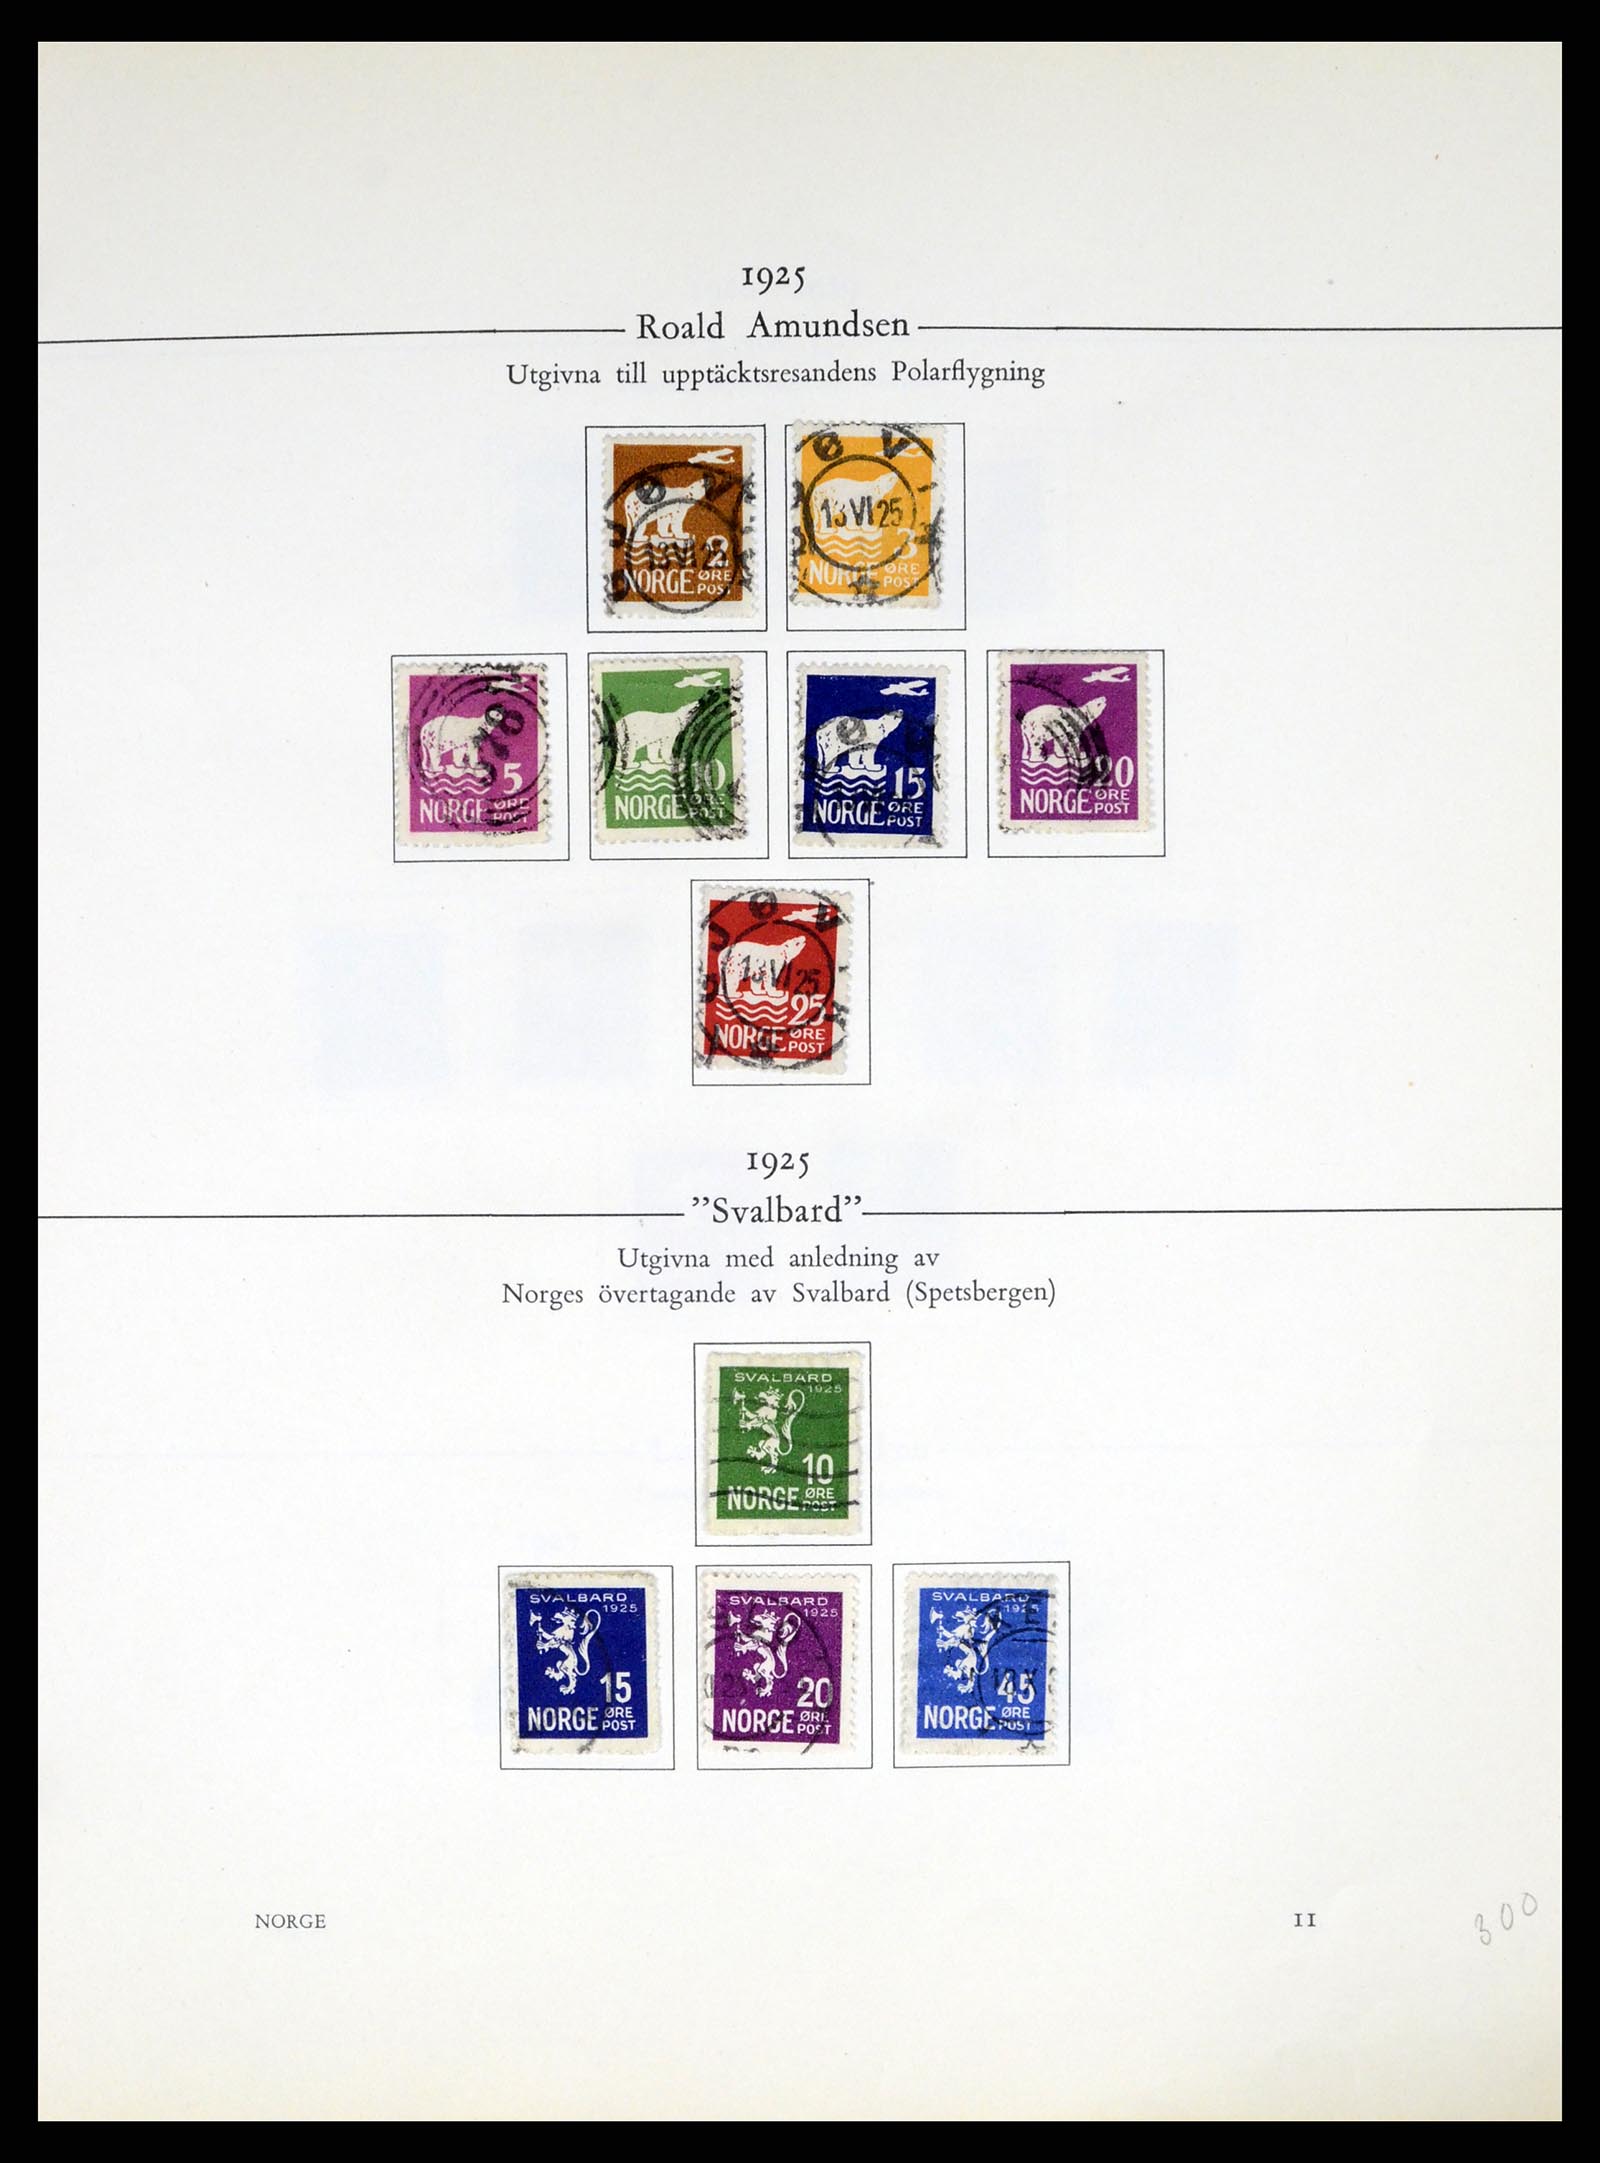 37387 011 - Stamp collection 37387 Scandinavia 1851-1960.